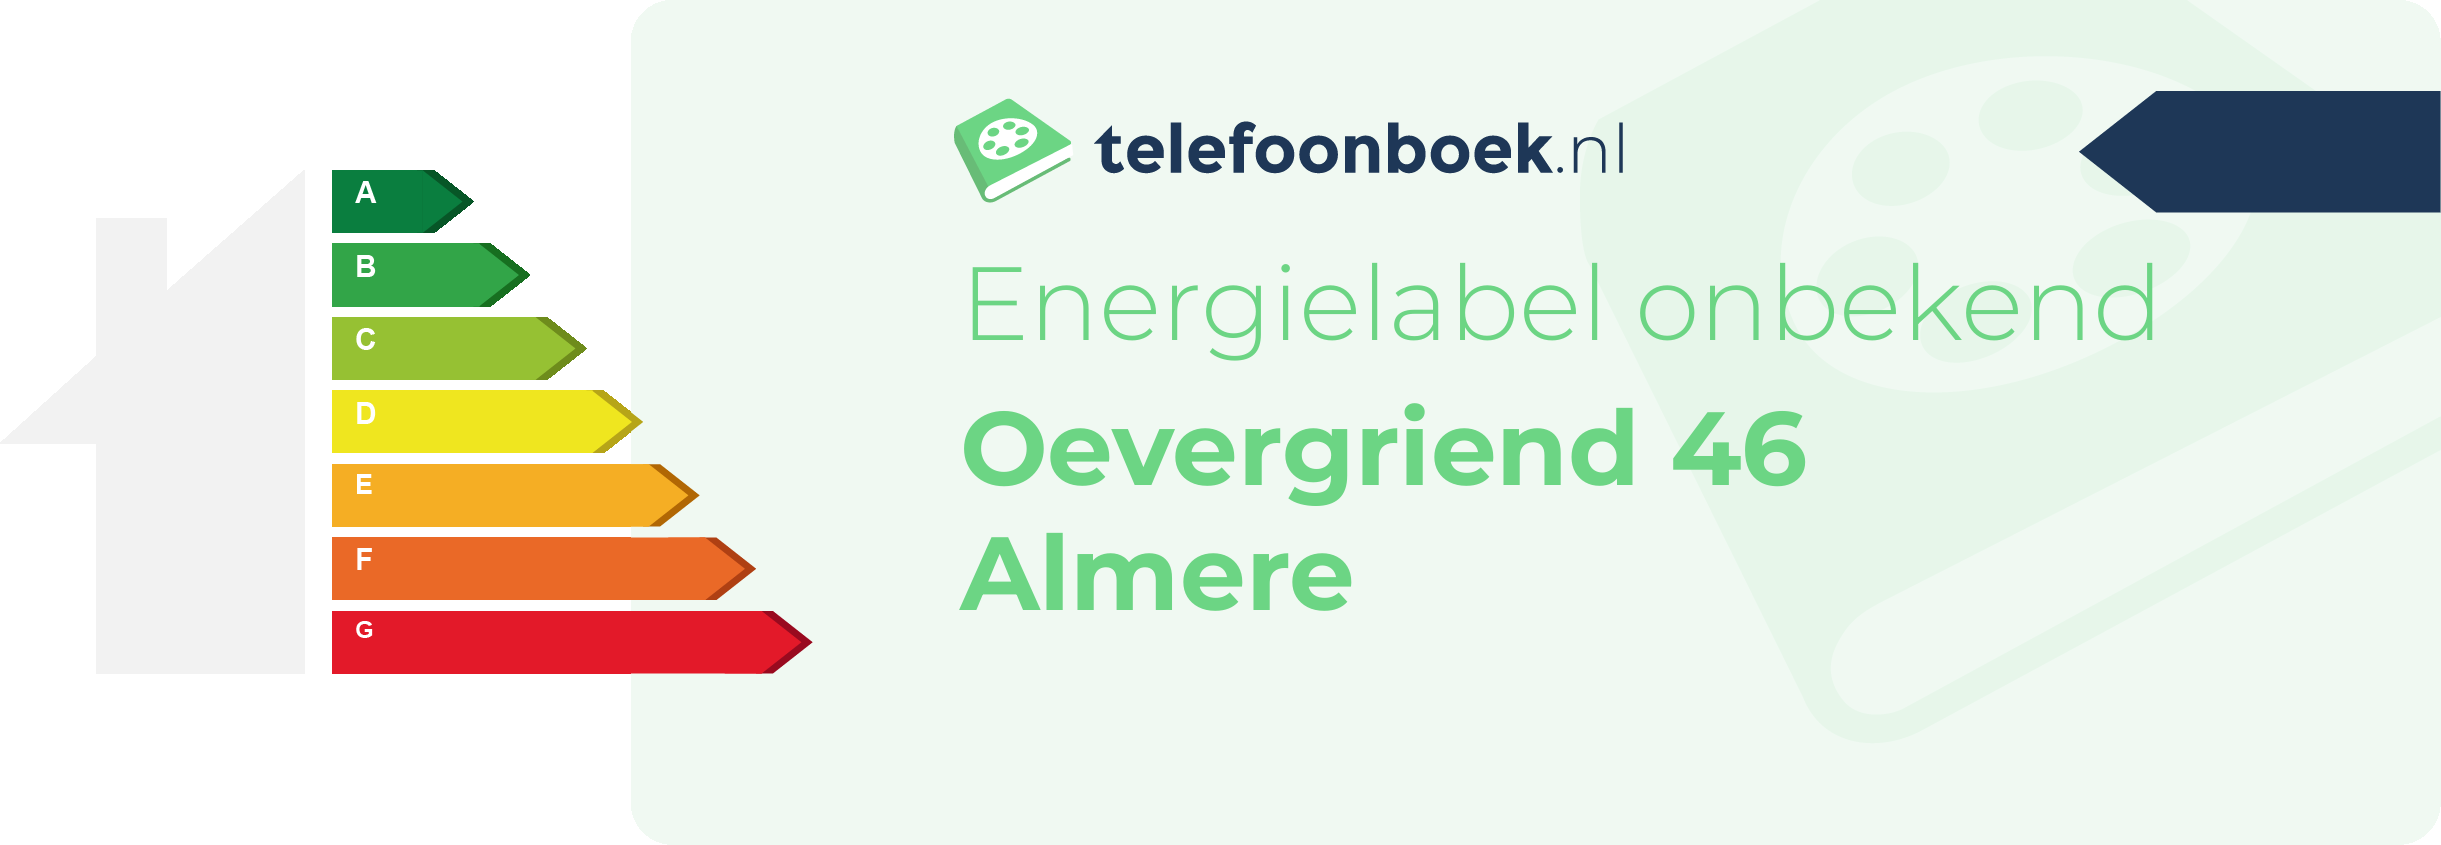 Energielabel Oevergriend 46 Almere